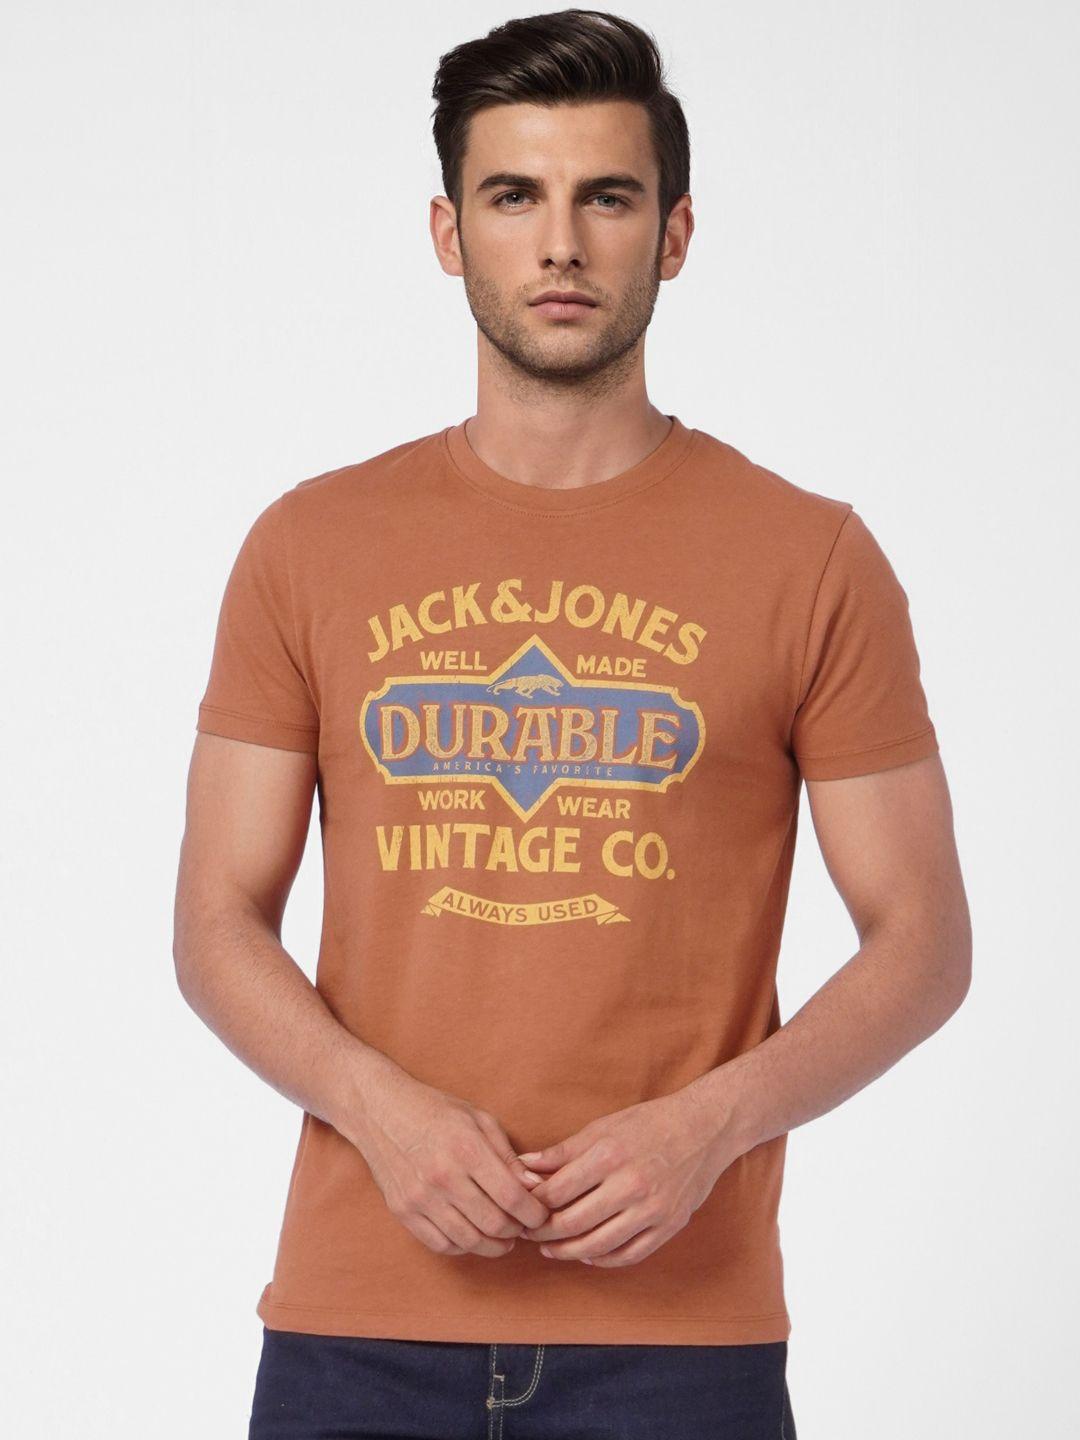 jack & jones men brown & yellow typography printed pure cotton slim fit t-shirt